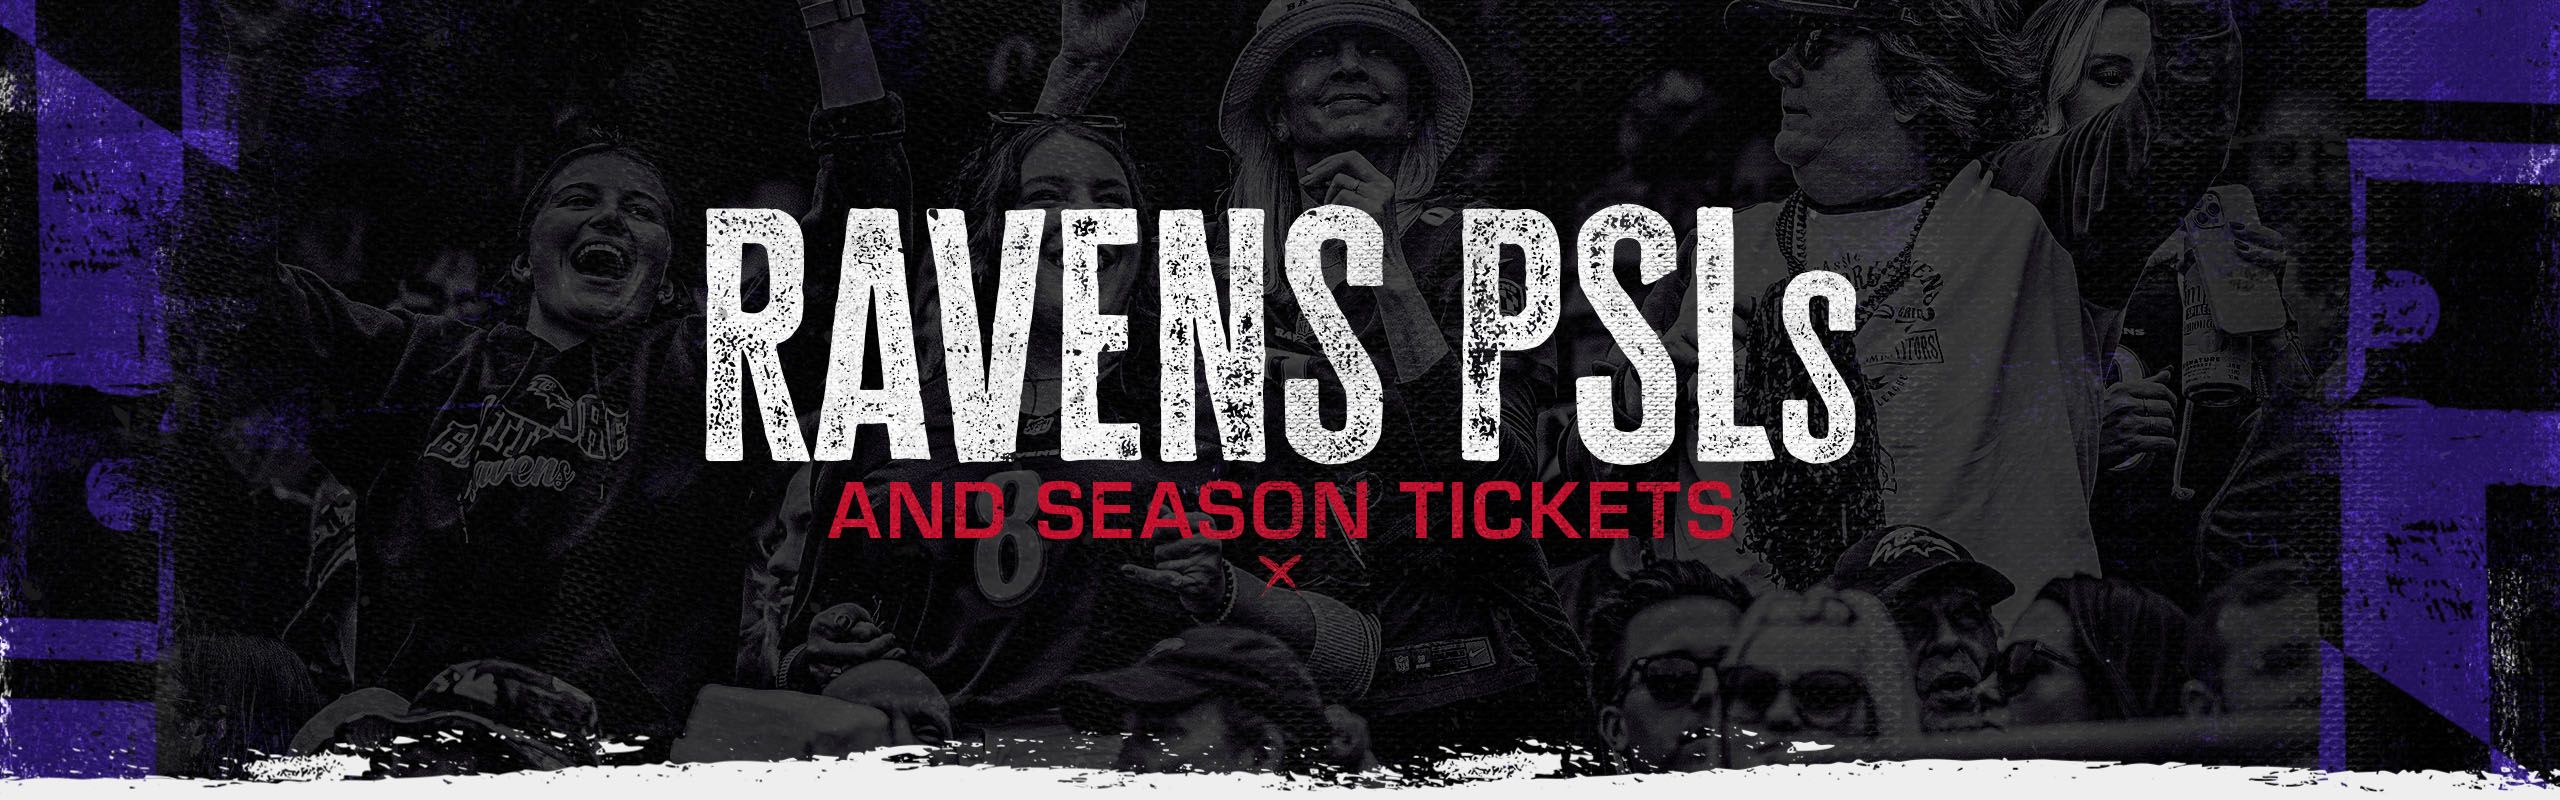 Ravens PSL and Season Ticket Information